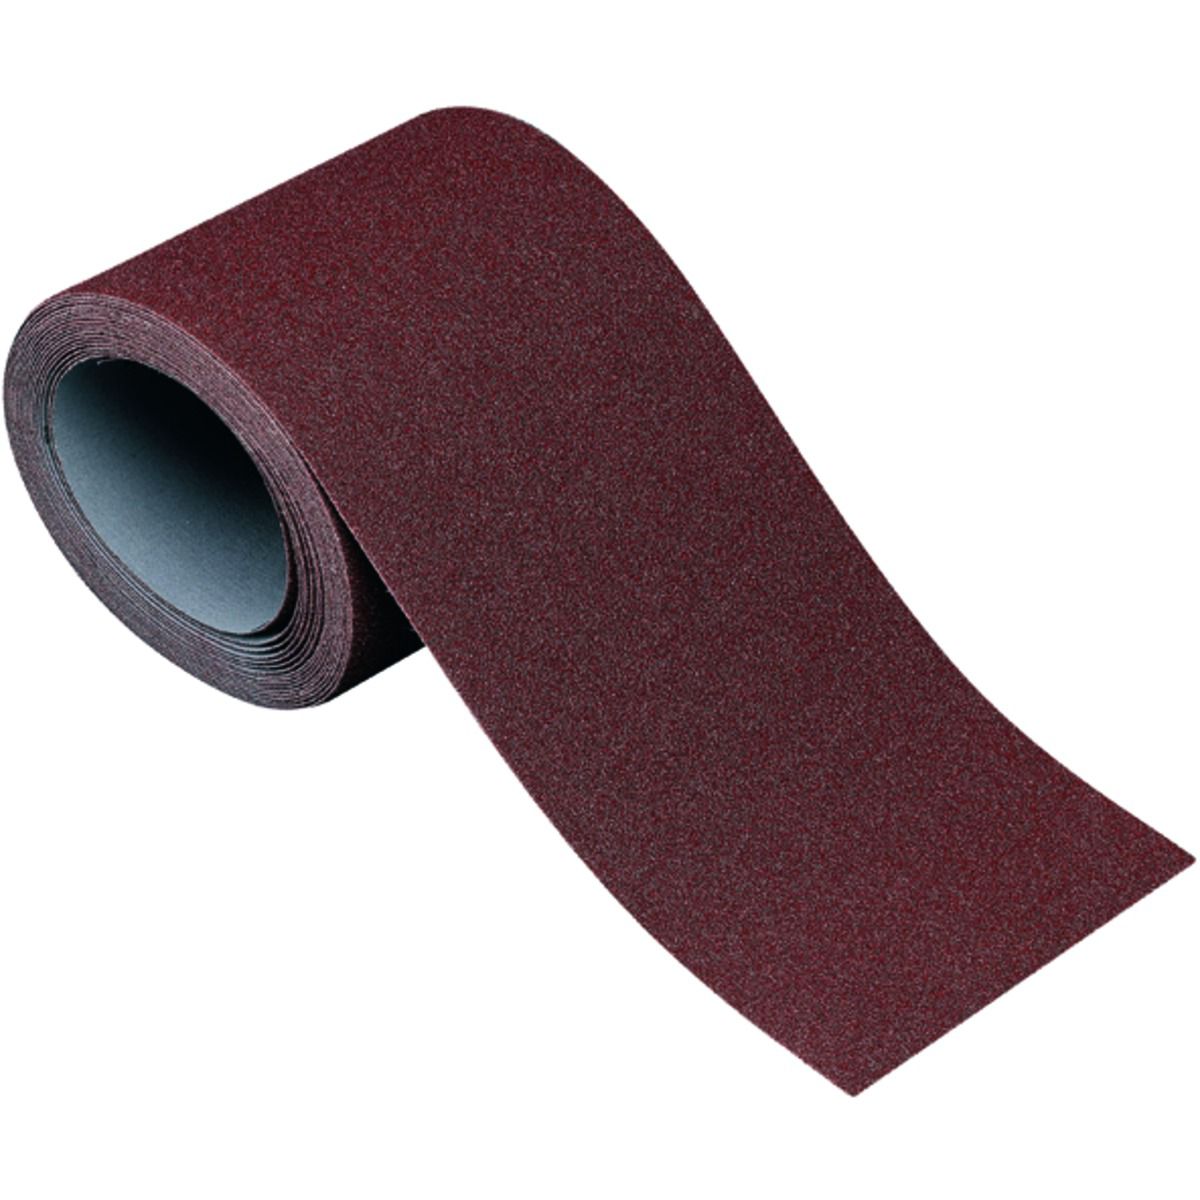 Image of Wickes Aluminium Oxide Cloth-Backed Coarse Sandpaper Roll - 5m